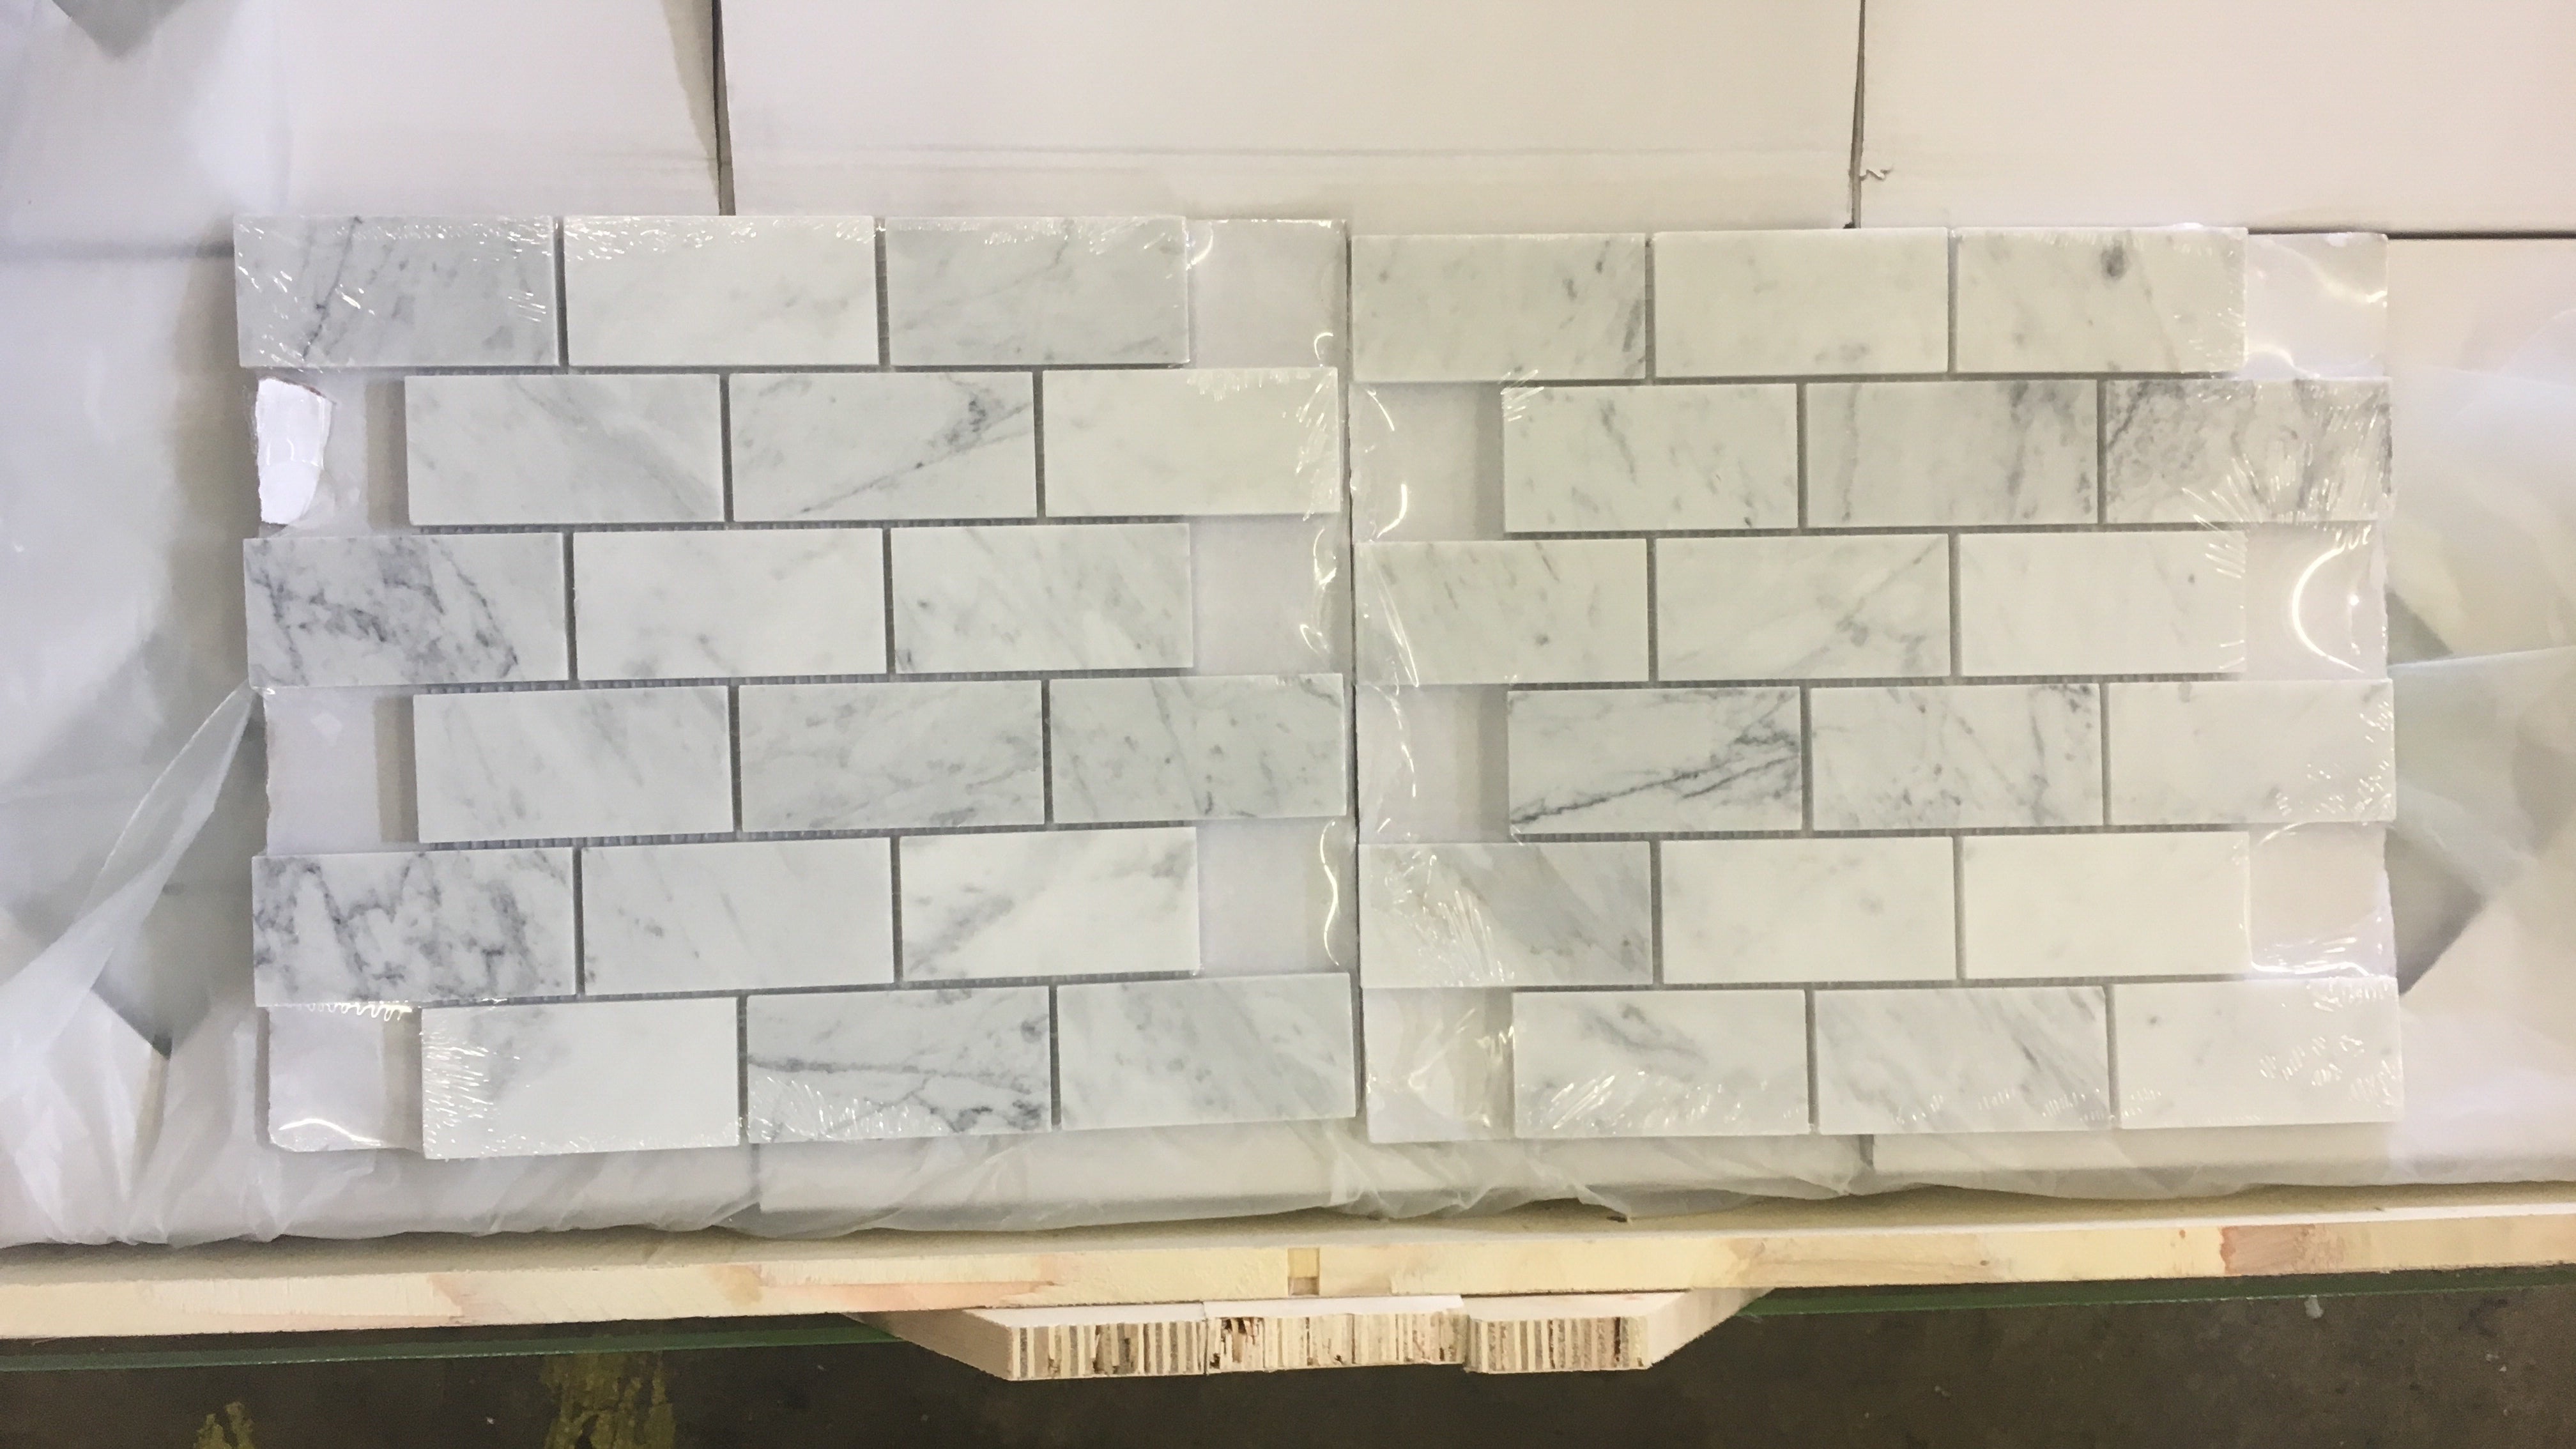 Carrara White Italian Carrera Marble Subway Brick Mosaic Floor Wall Tile 2x4 Honed for Kitchen Backsplash, bathroom Shower, Accent Décor, Fireplace